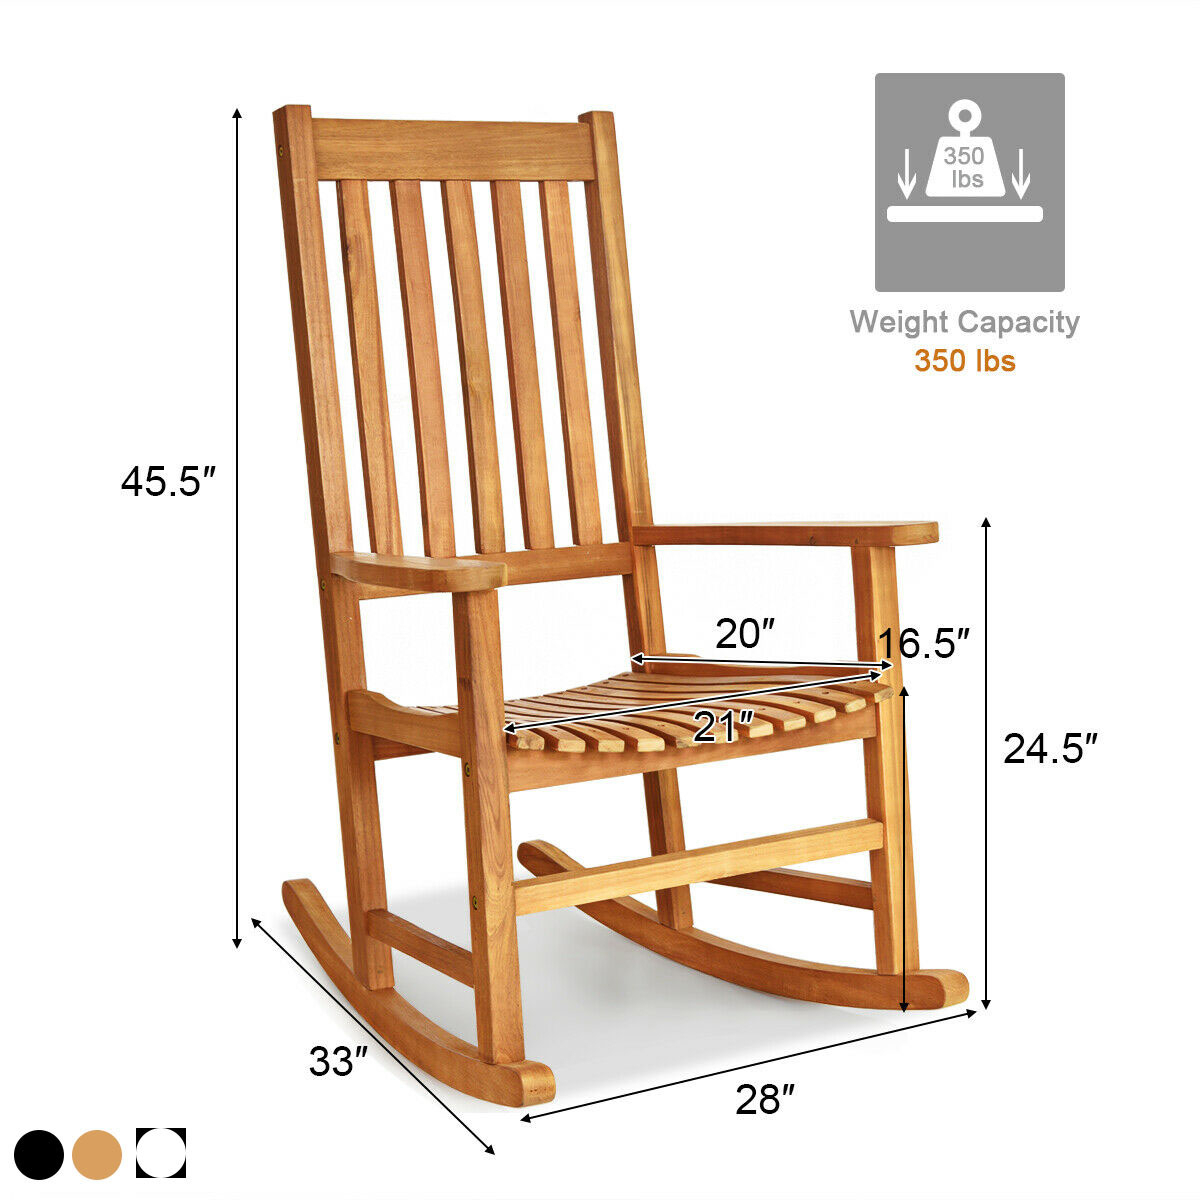 2PCS Wood Rocking Chair Porch Rocker High Back Garden Seat Indoor Outdoor - Black